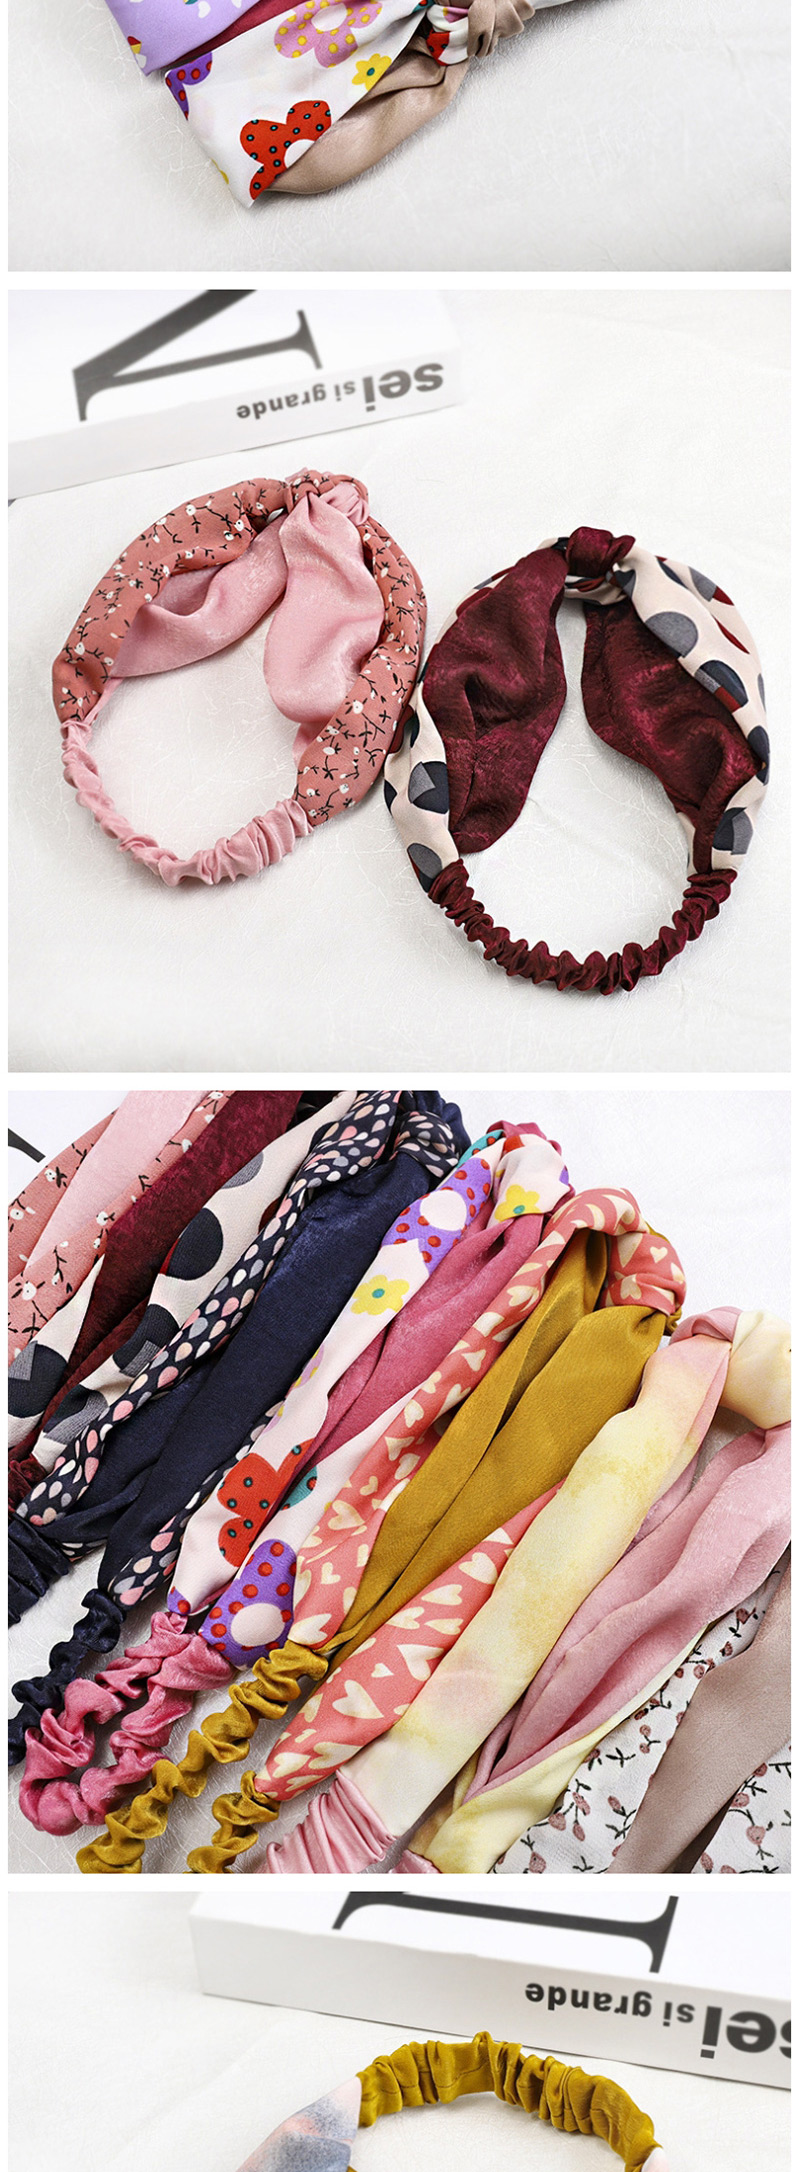 Fashion 藕 Powder Dot + Pink Elastic Cross Knotted Print Headband,Hair Ribbons